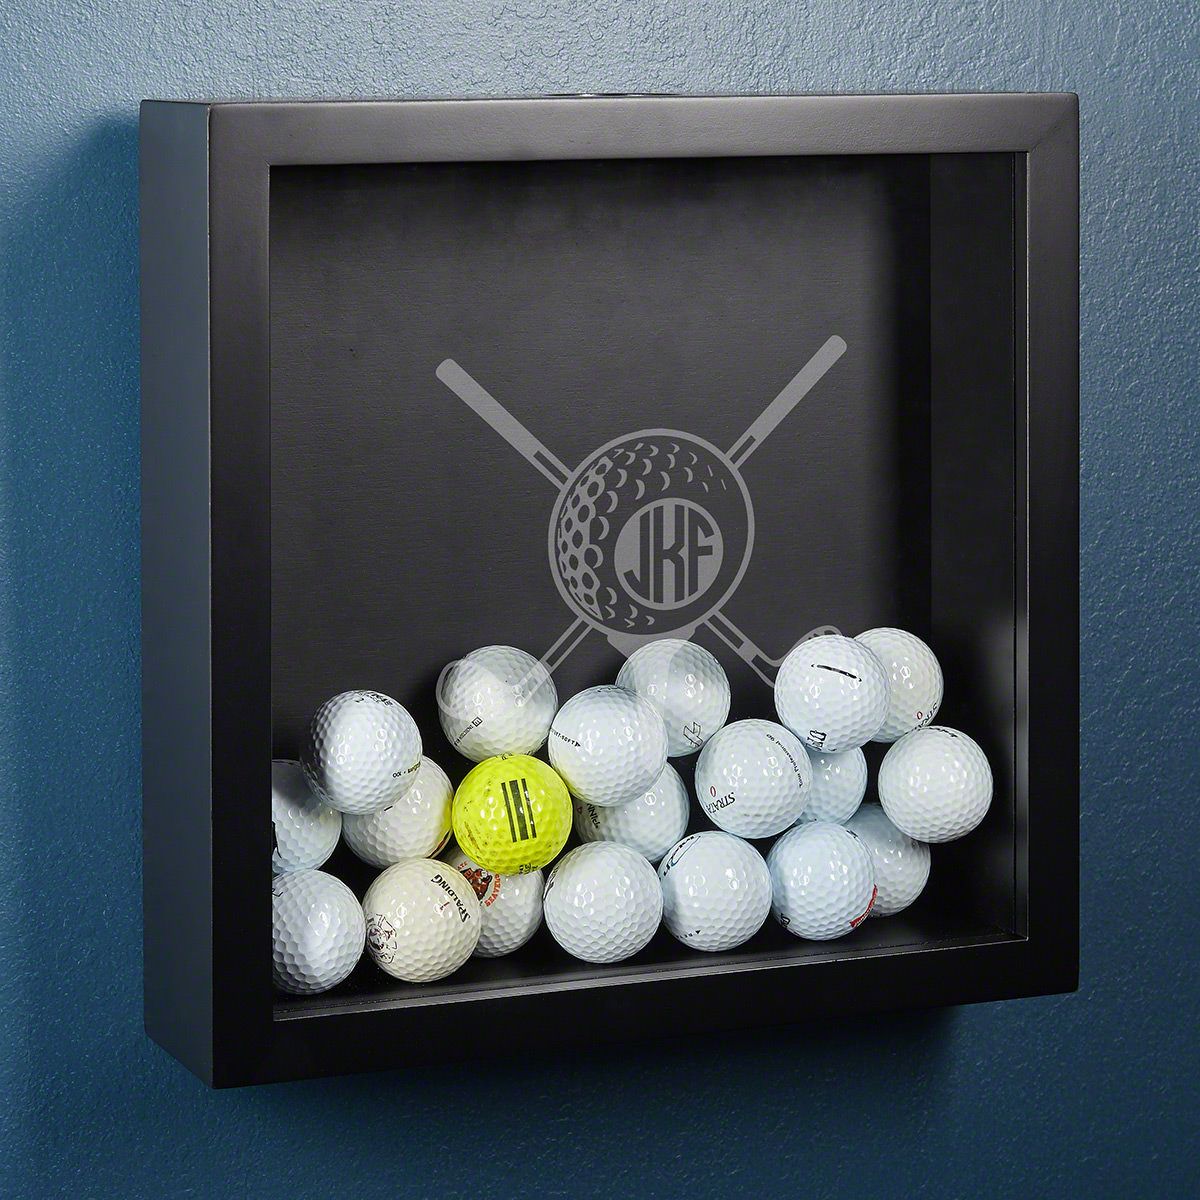 Acrylic Golf Ball Display Stand | Holds 3 Golf Balls | Acrylic and Metal |  3 Golf Tees Included (Acrylic)